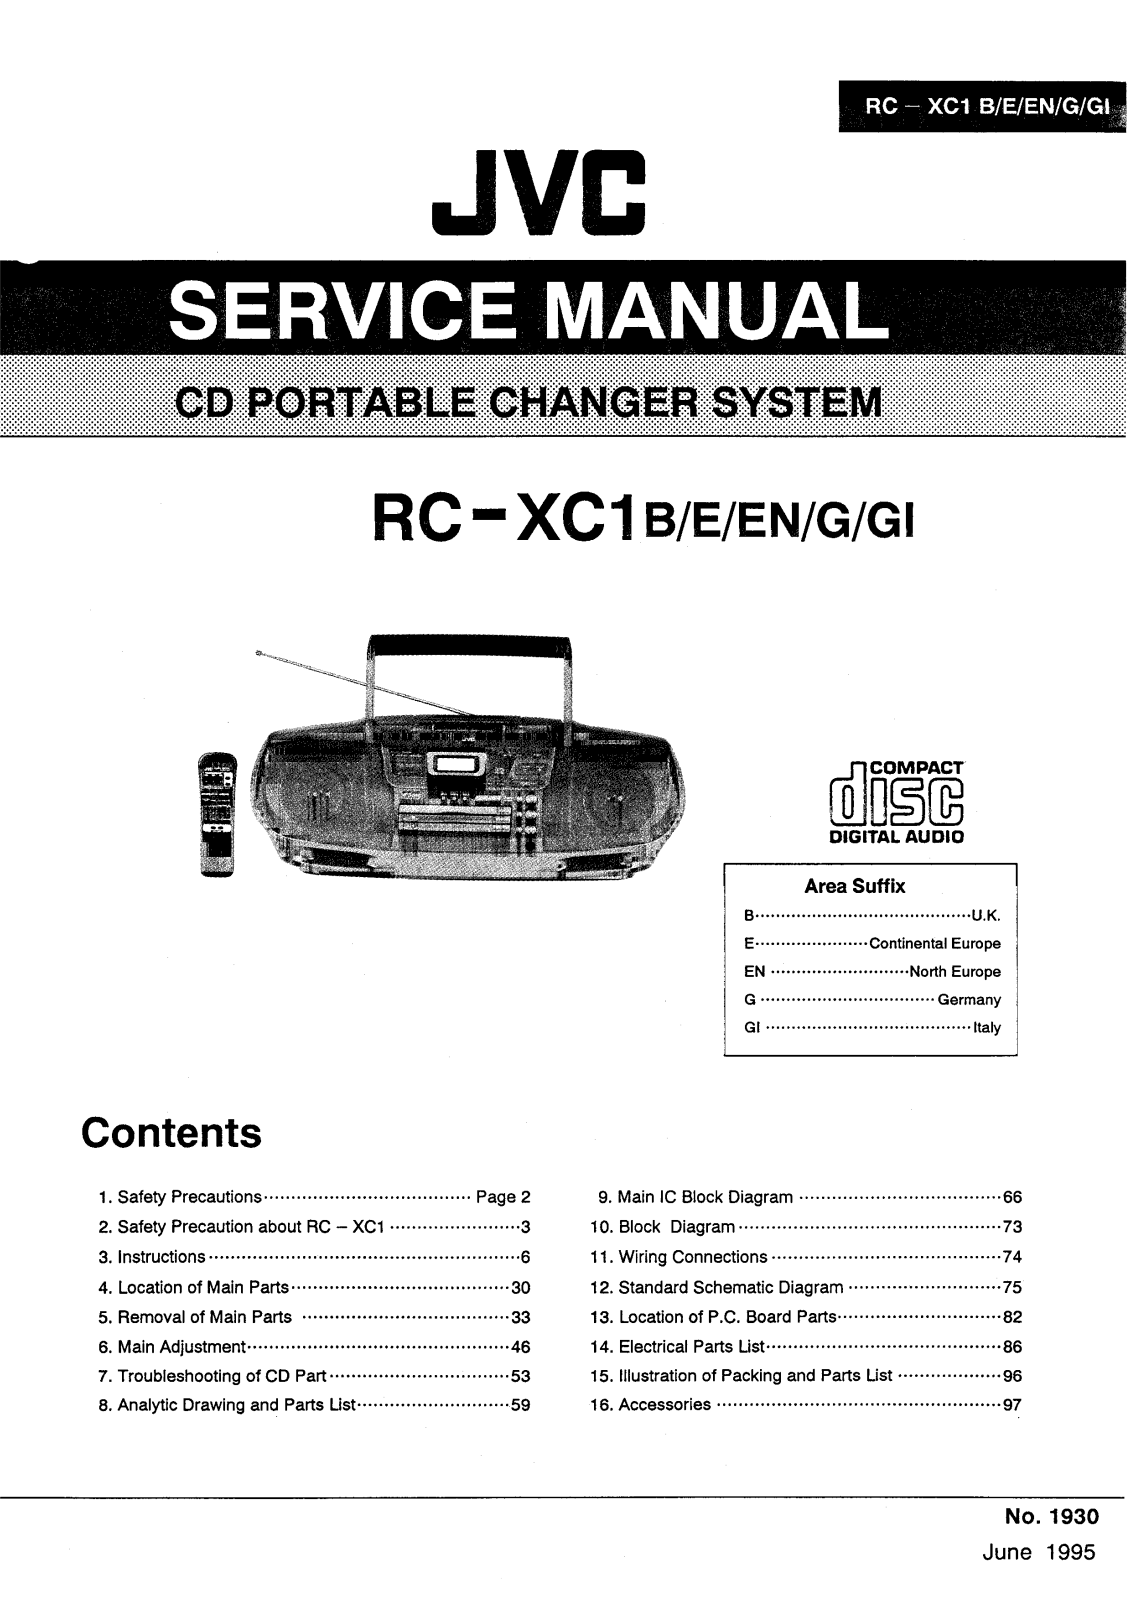 Jvc RC-XC1 Service Manual